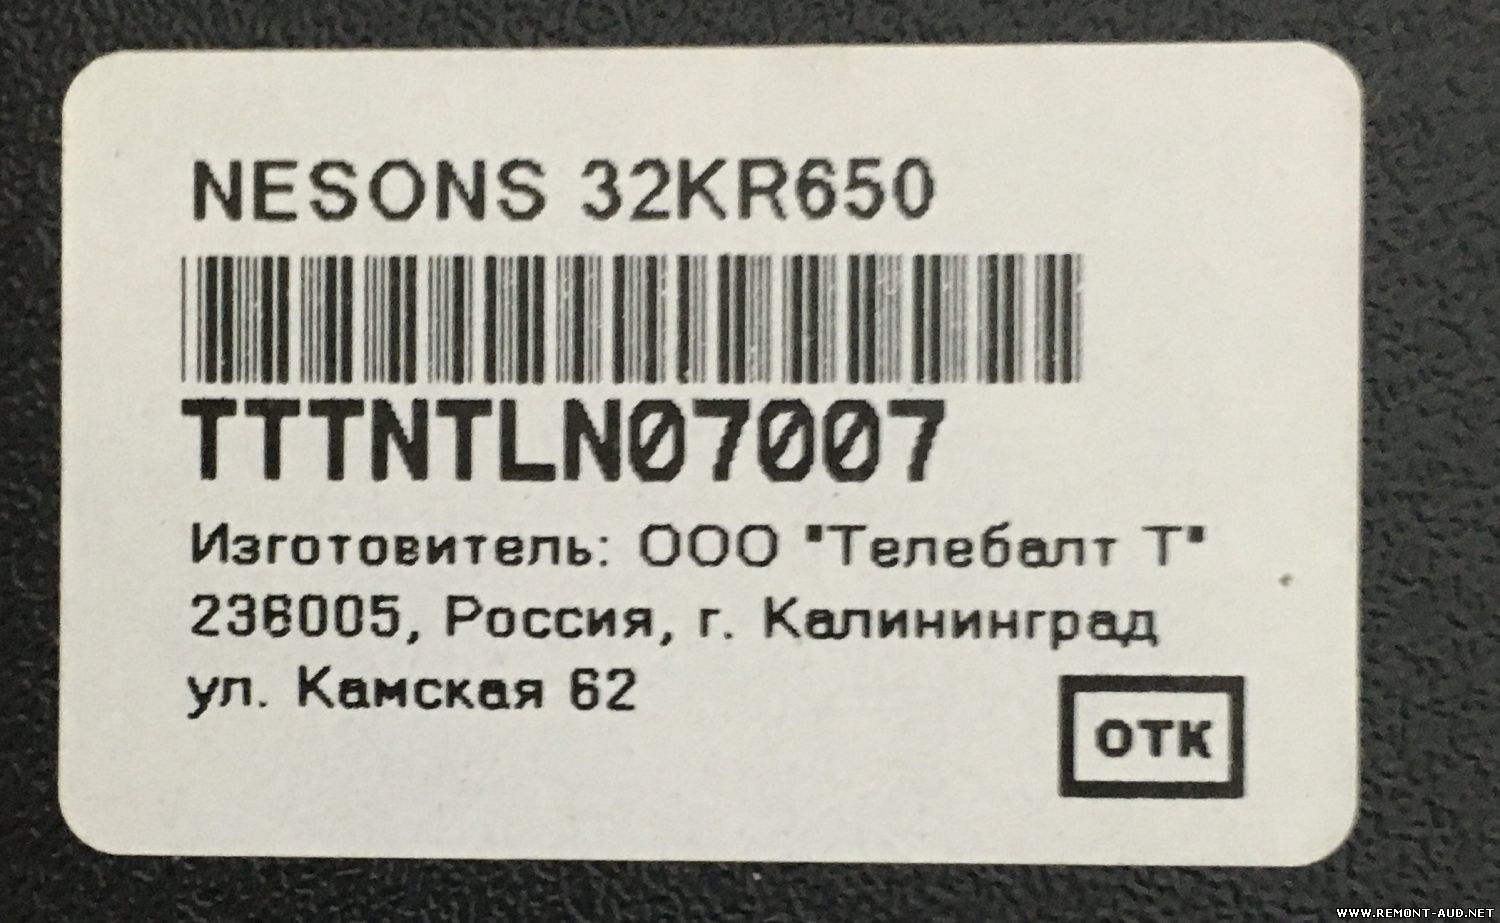 NESONS 32KR650 Main: HK.T.S2T512CP539 Panel: KM0320LDRH000893. 